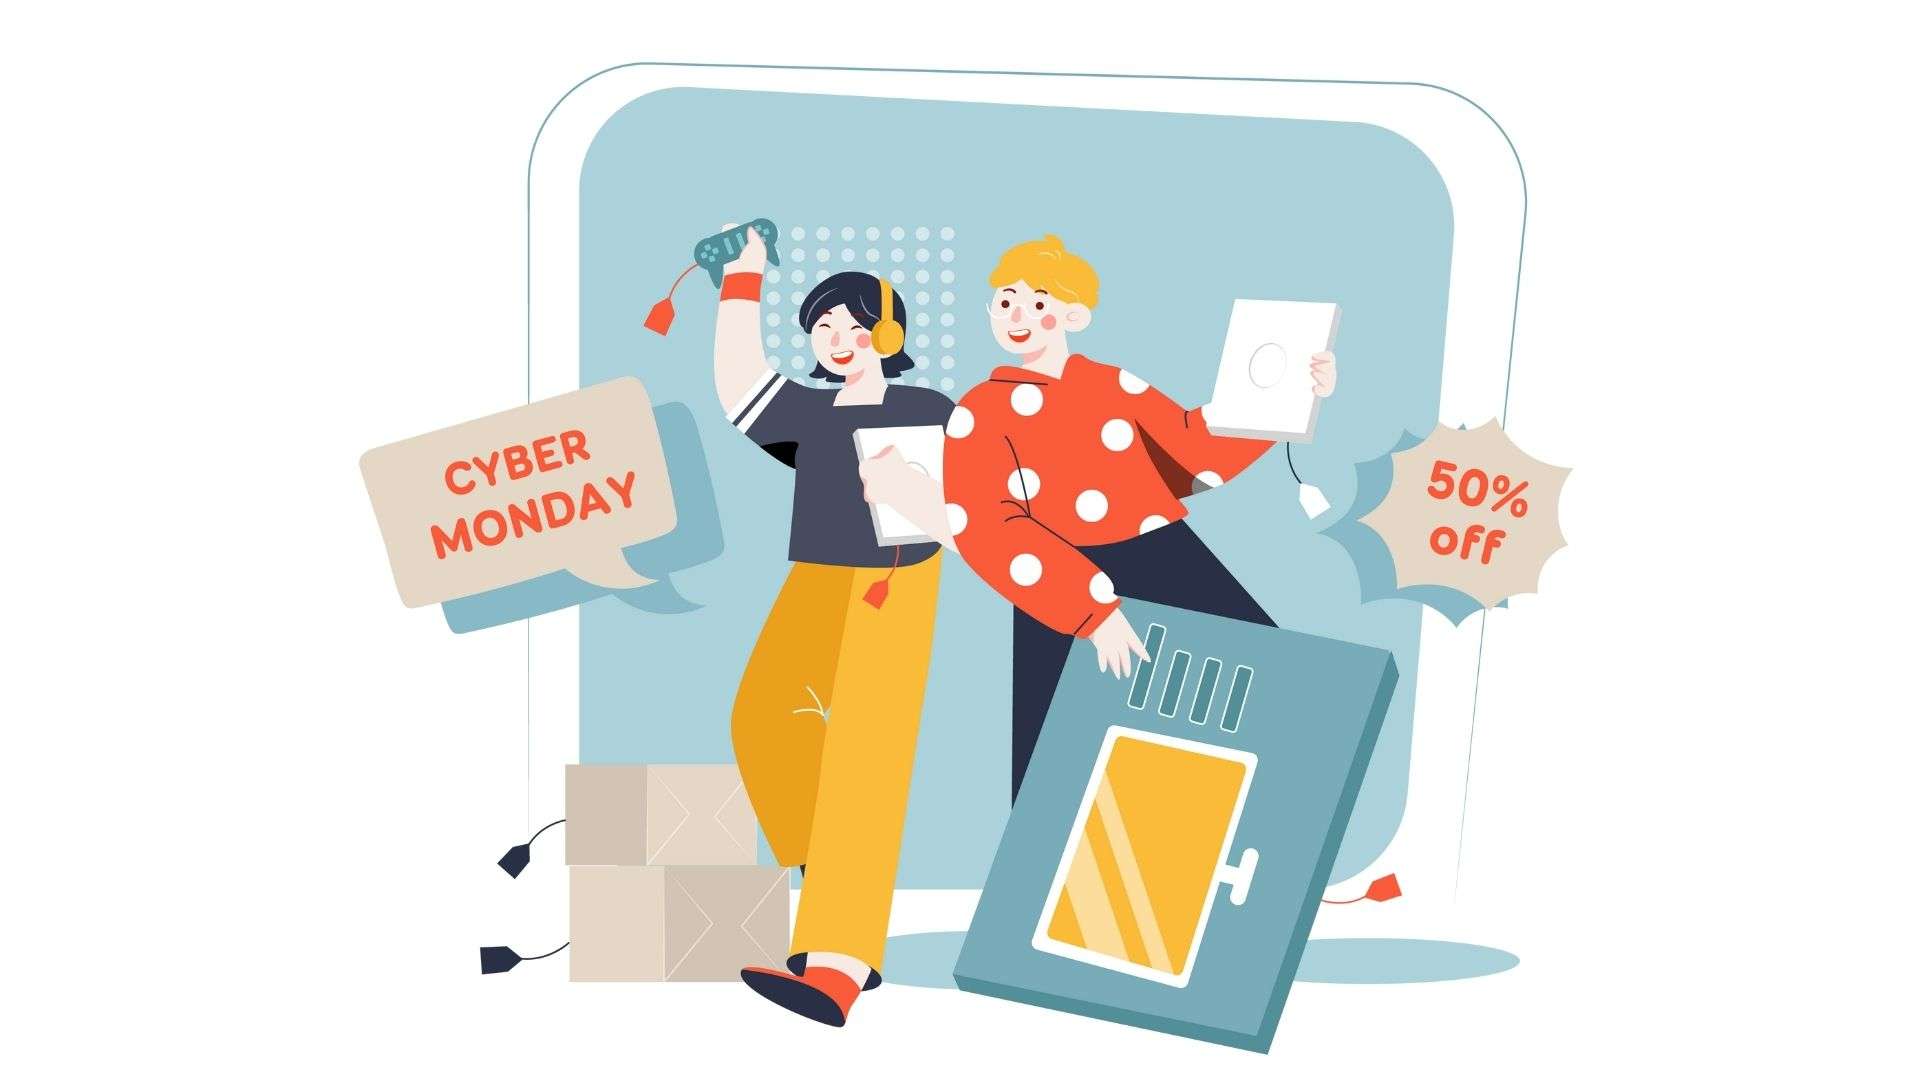 Cyber Monday sale illustration 